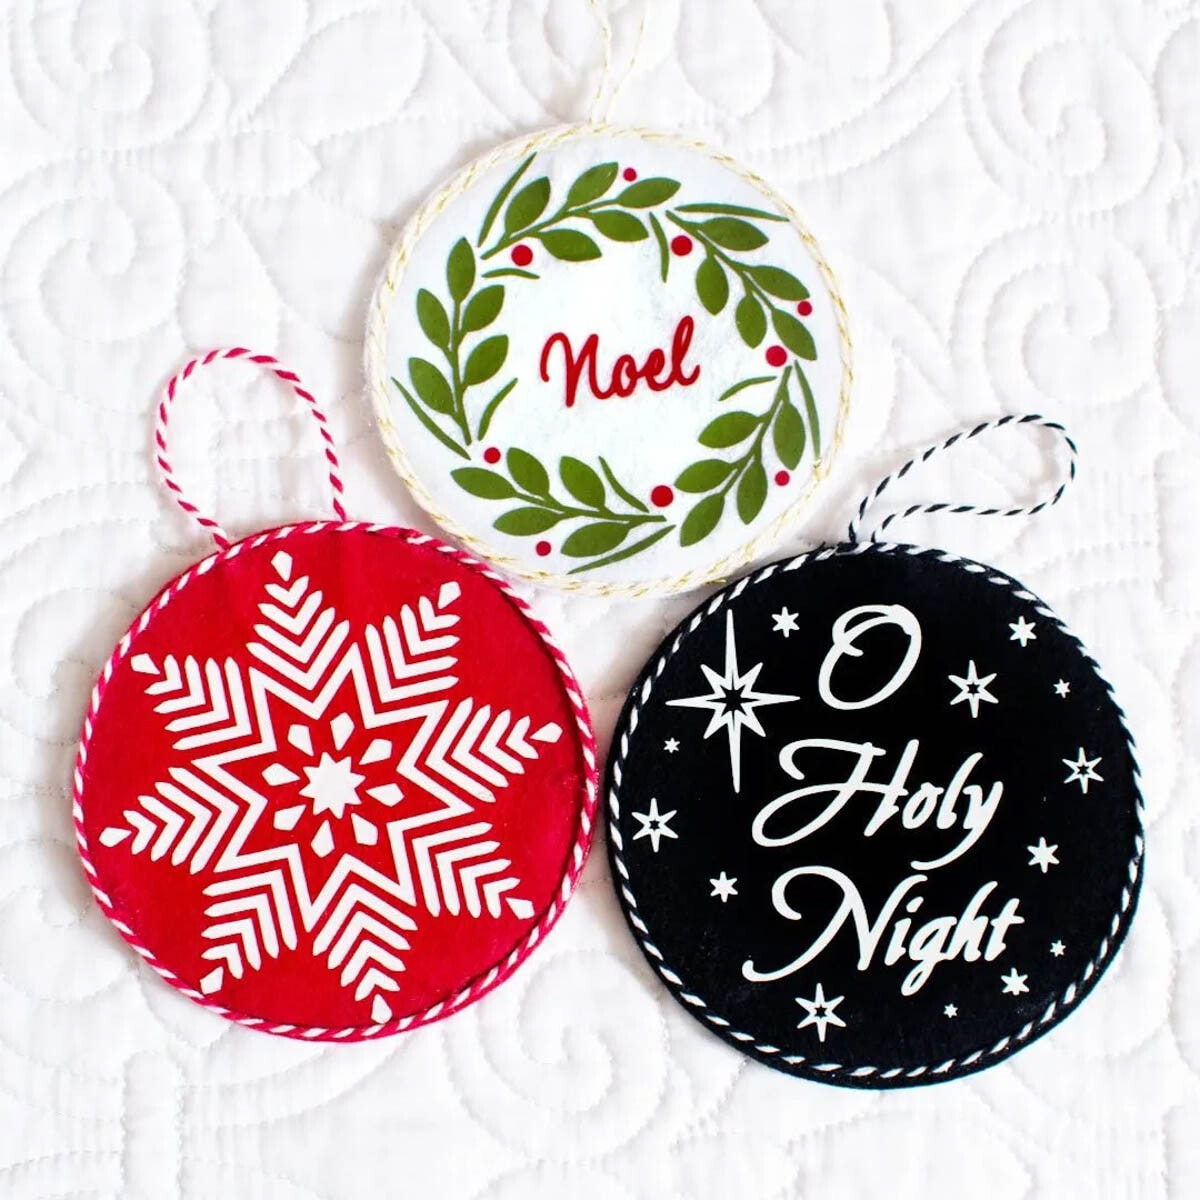 Three felt ornaments made with Cricut